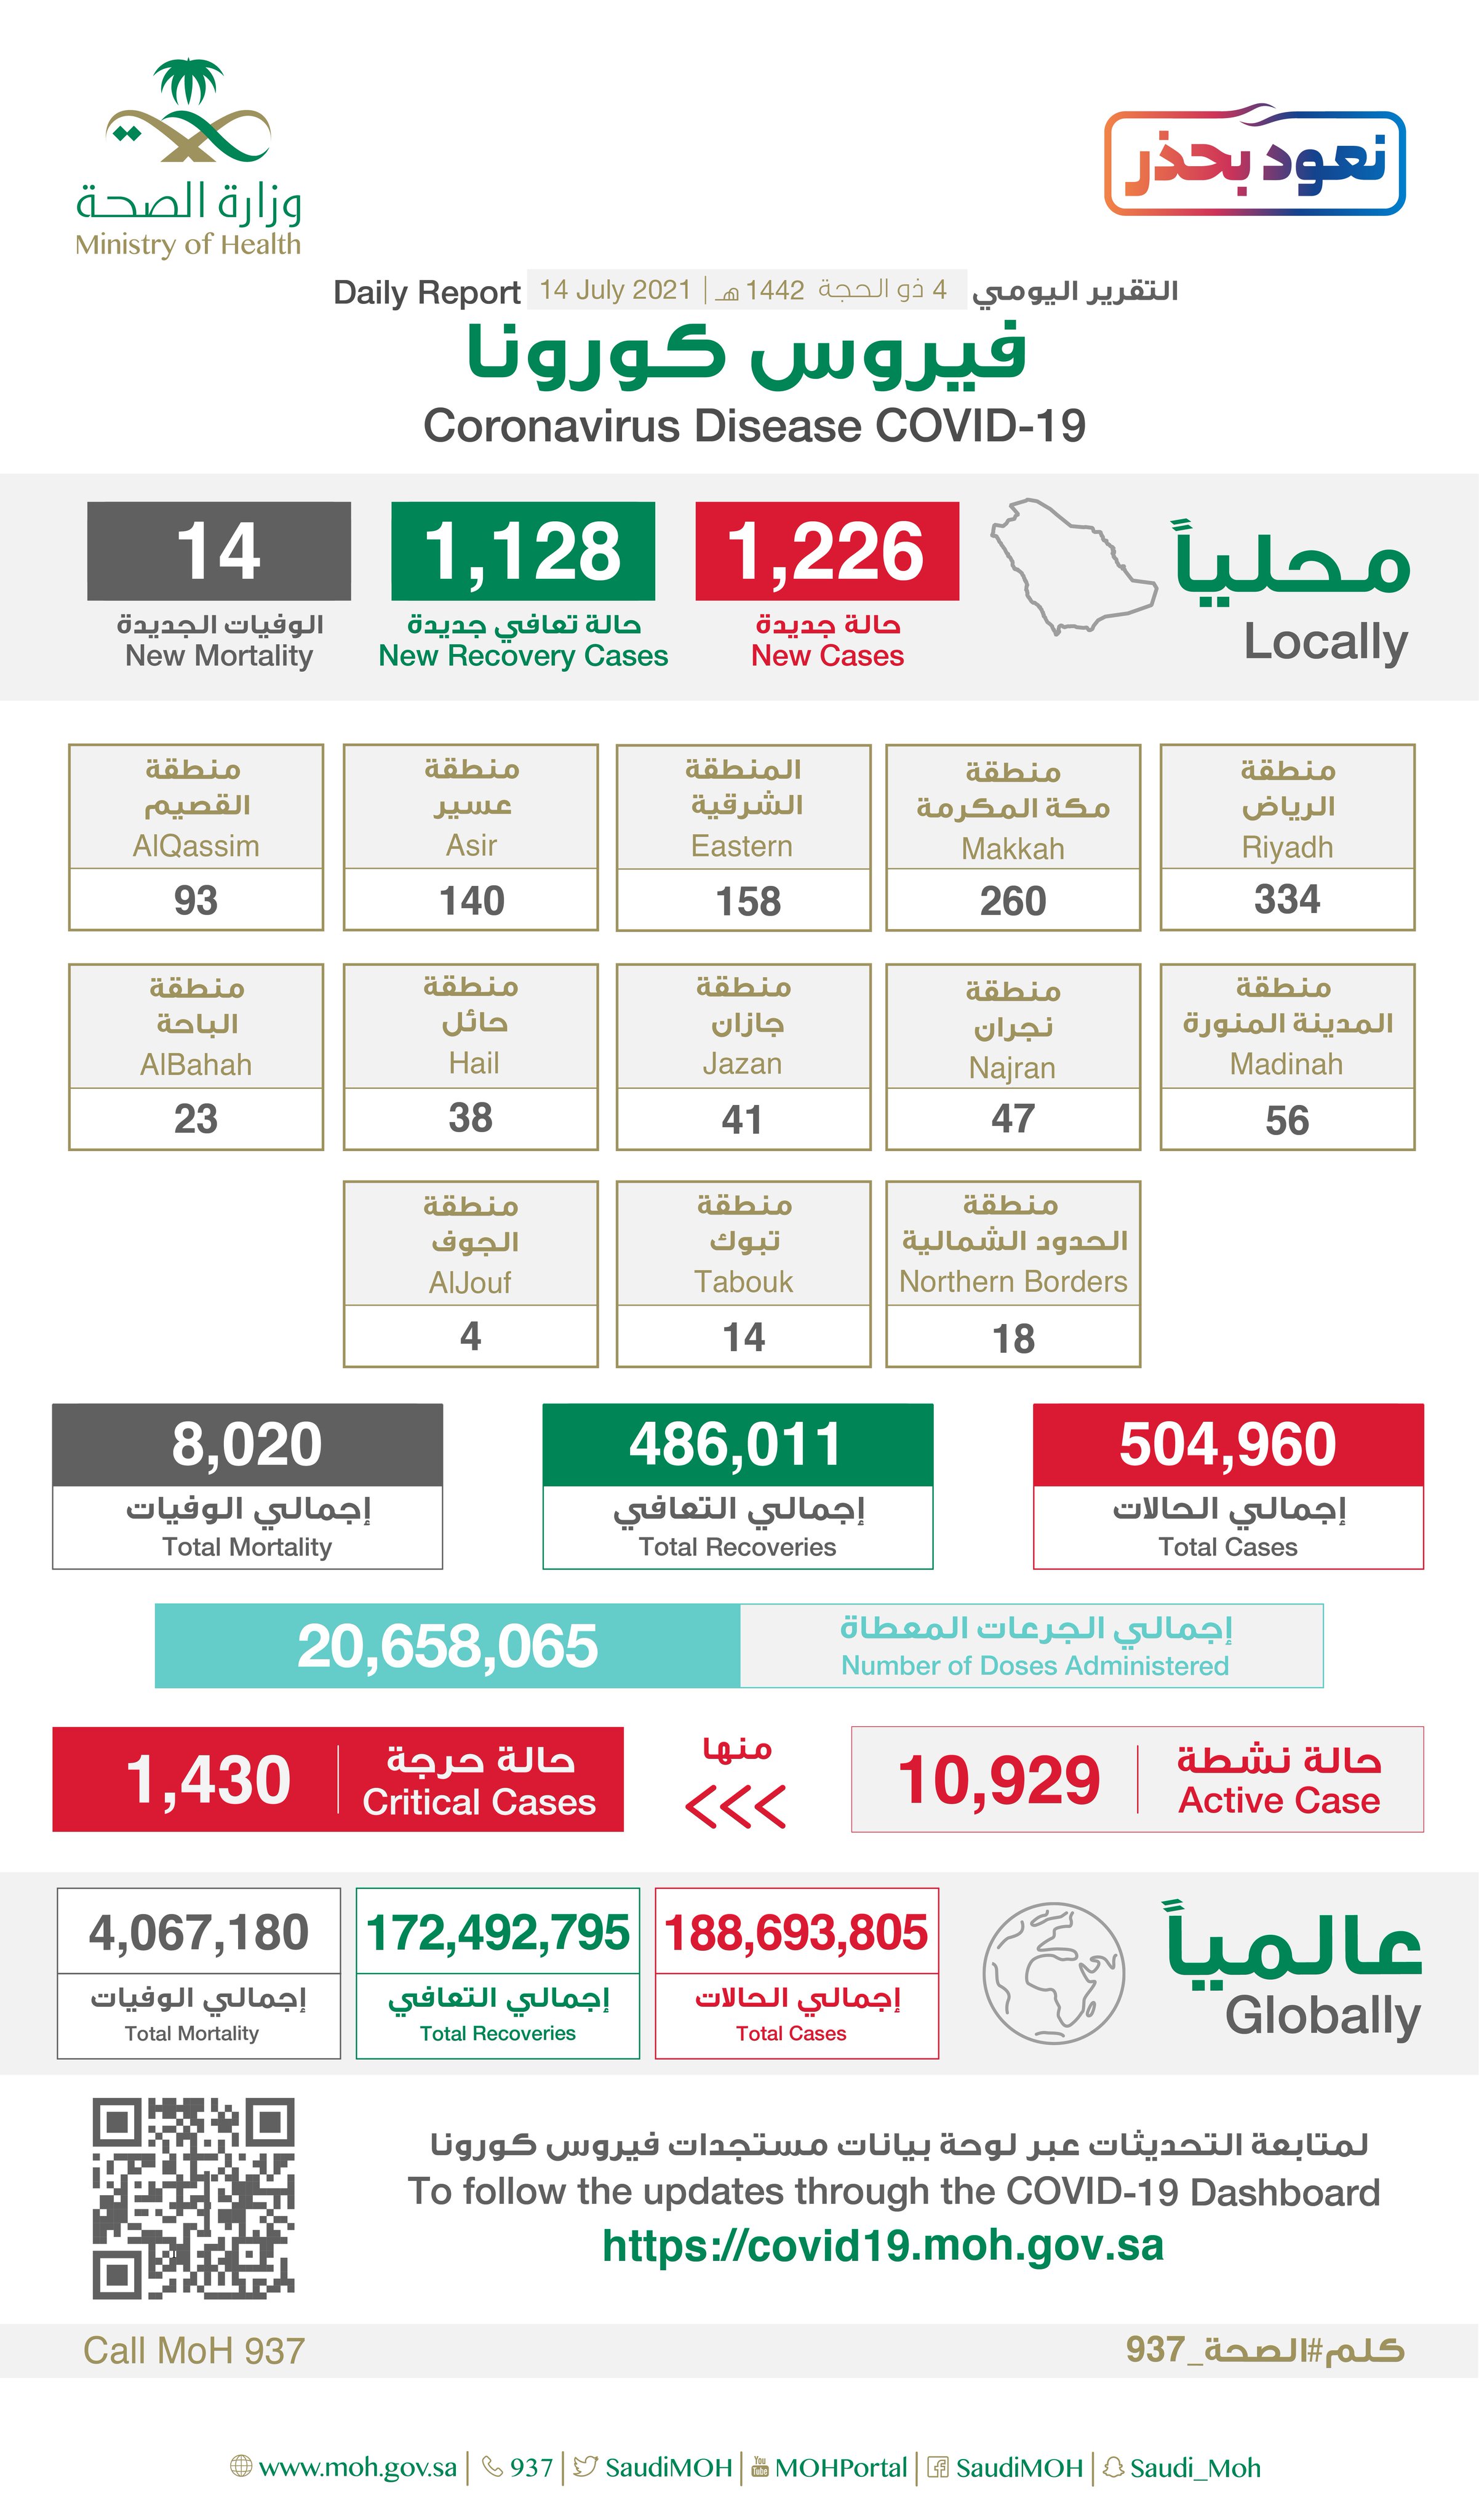 Saudi Arabia Coronavirus : Total Cases : 504,960 , New Cases :1,226, Cured : 486,011 , Deaths: 8,020 , Active Cases : 10,929